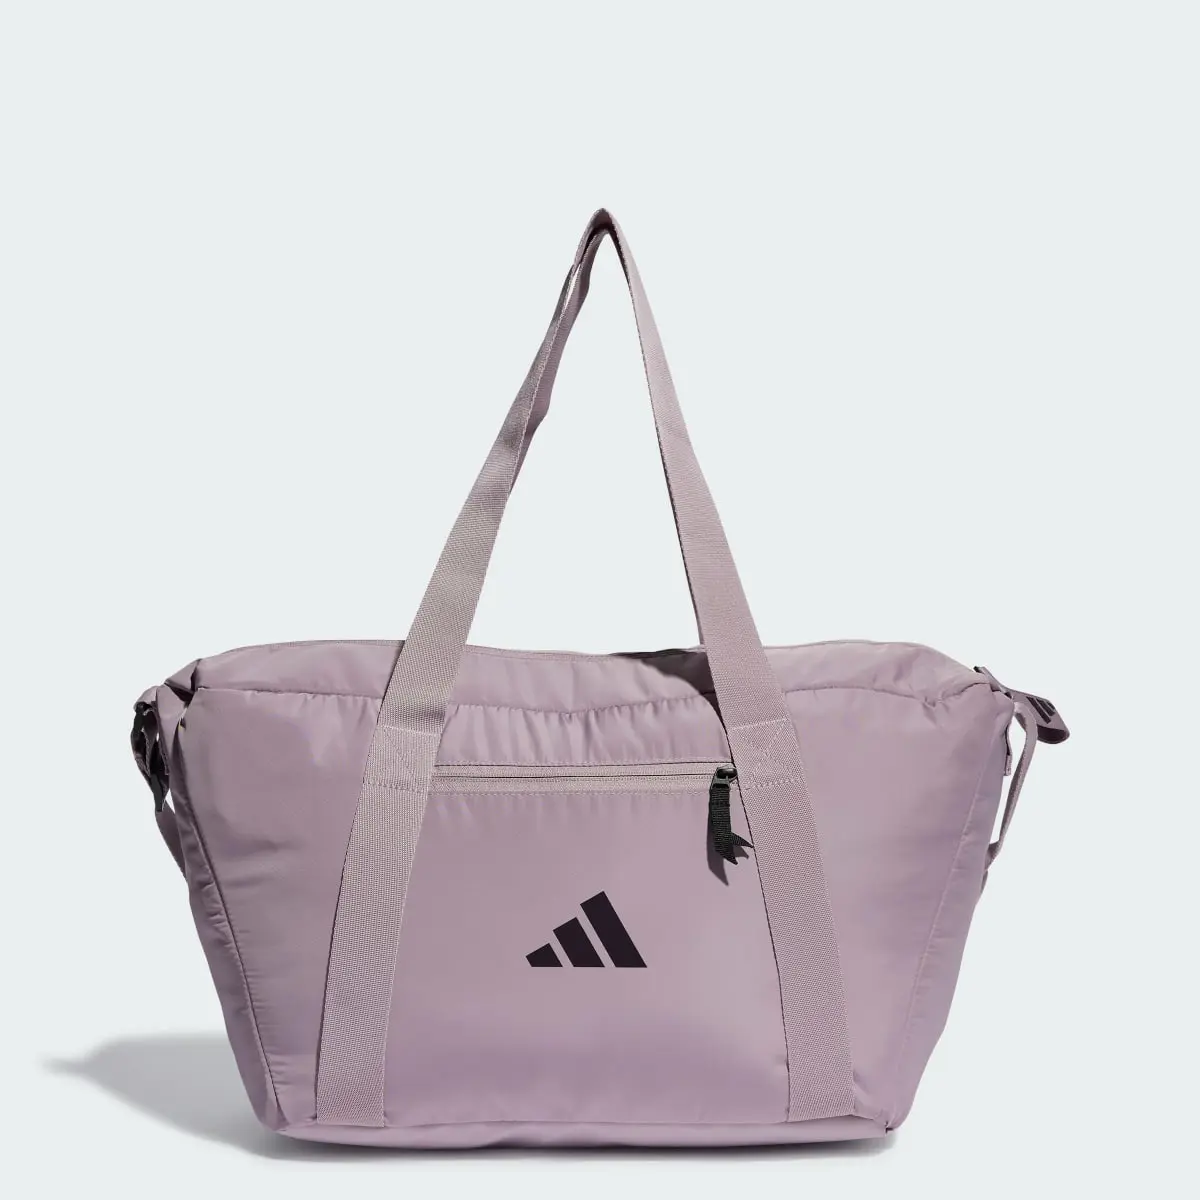 Adidas Sport Bag. 1